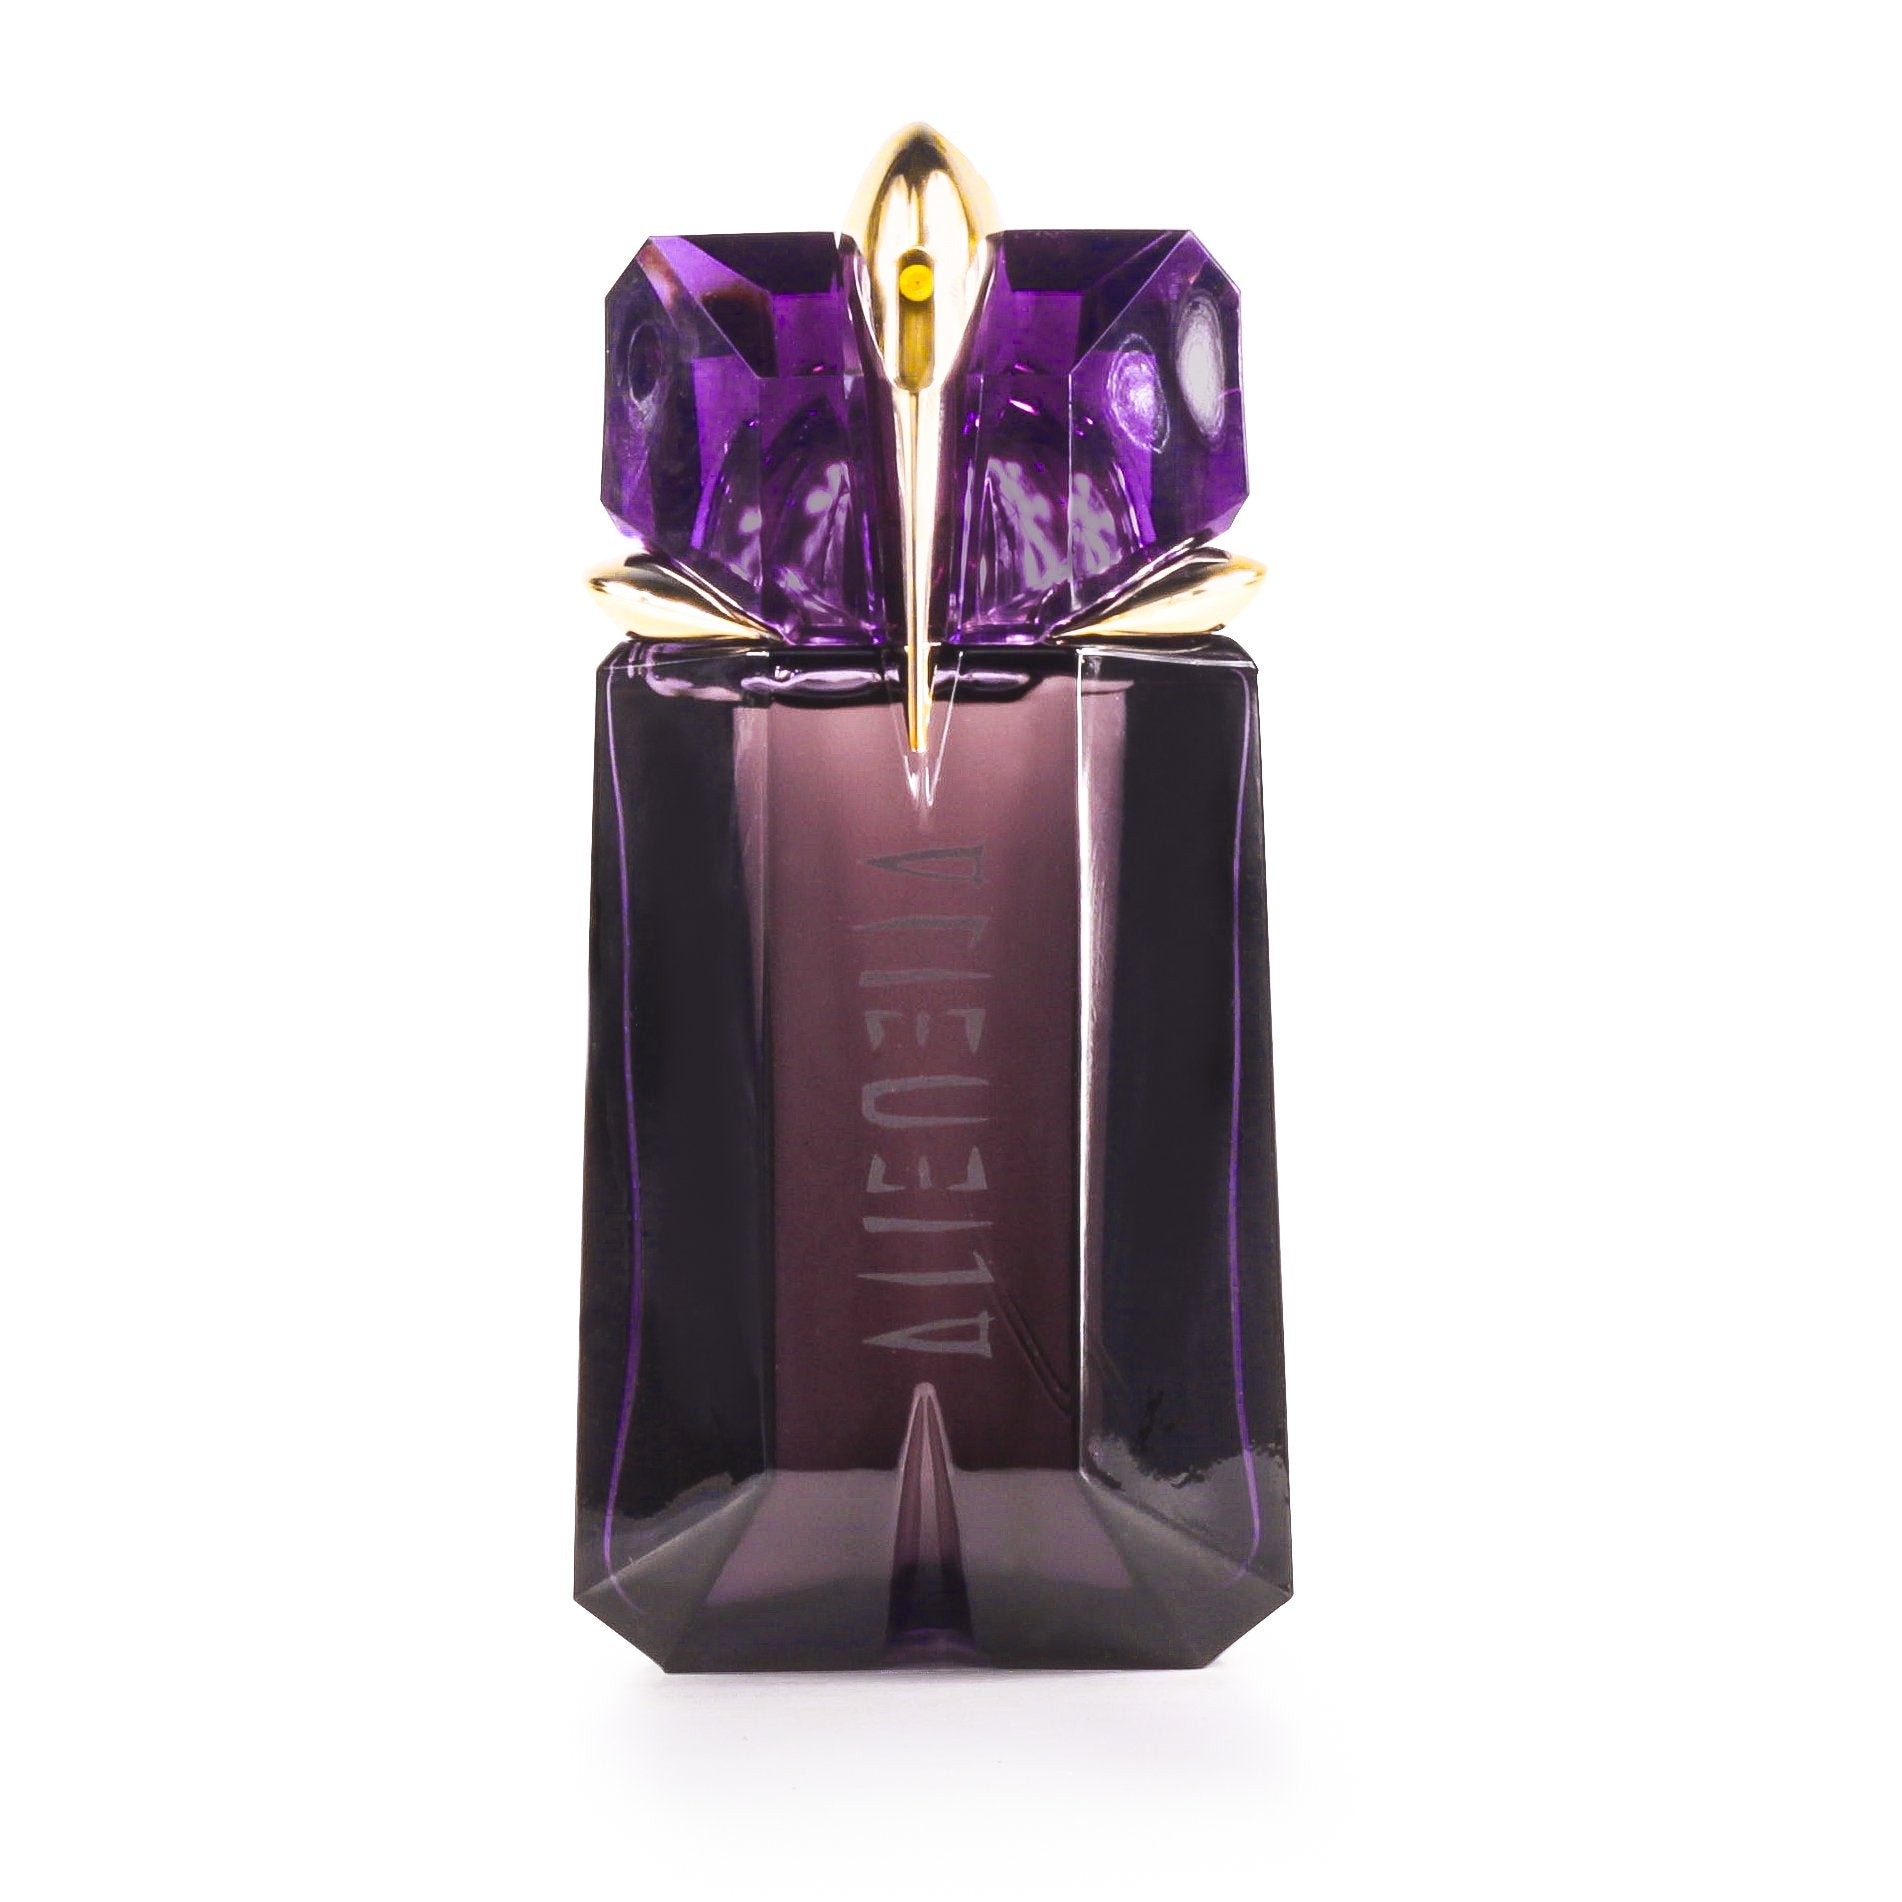 Alien Non Refillable Eau de Parfum Spray for Women by Thierry Mugler, Product image 4